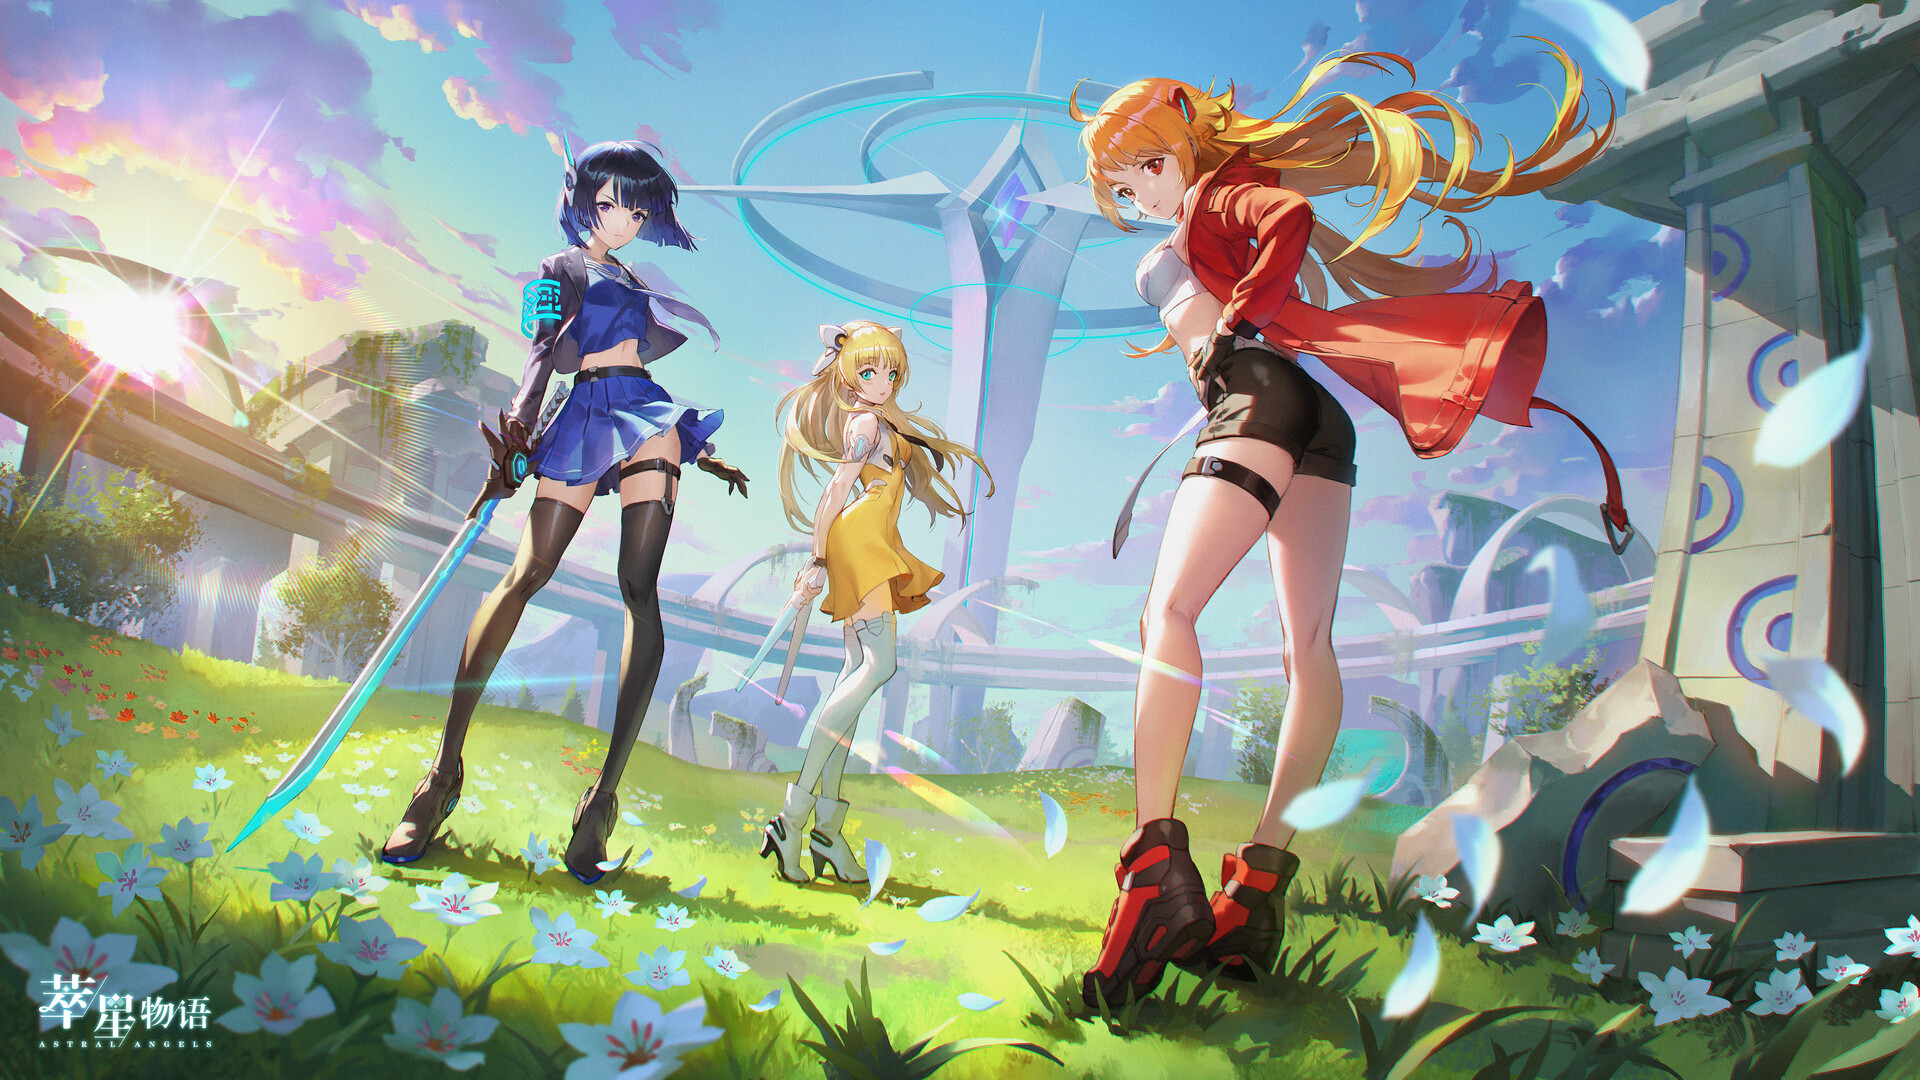 Bluezima Drawing Anime Girls Redhead Blue Hair Blonde Weapon Sword Boots Low Angle Sunlight Grass Pe 1920x1080